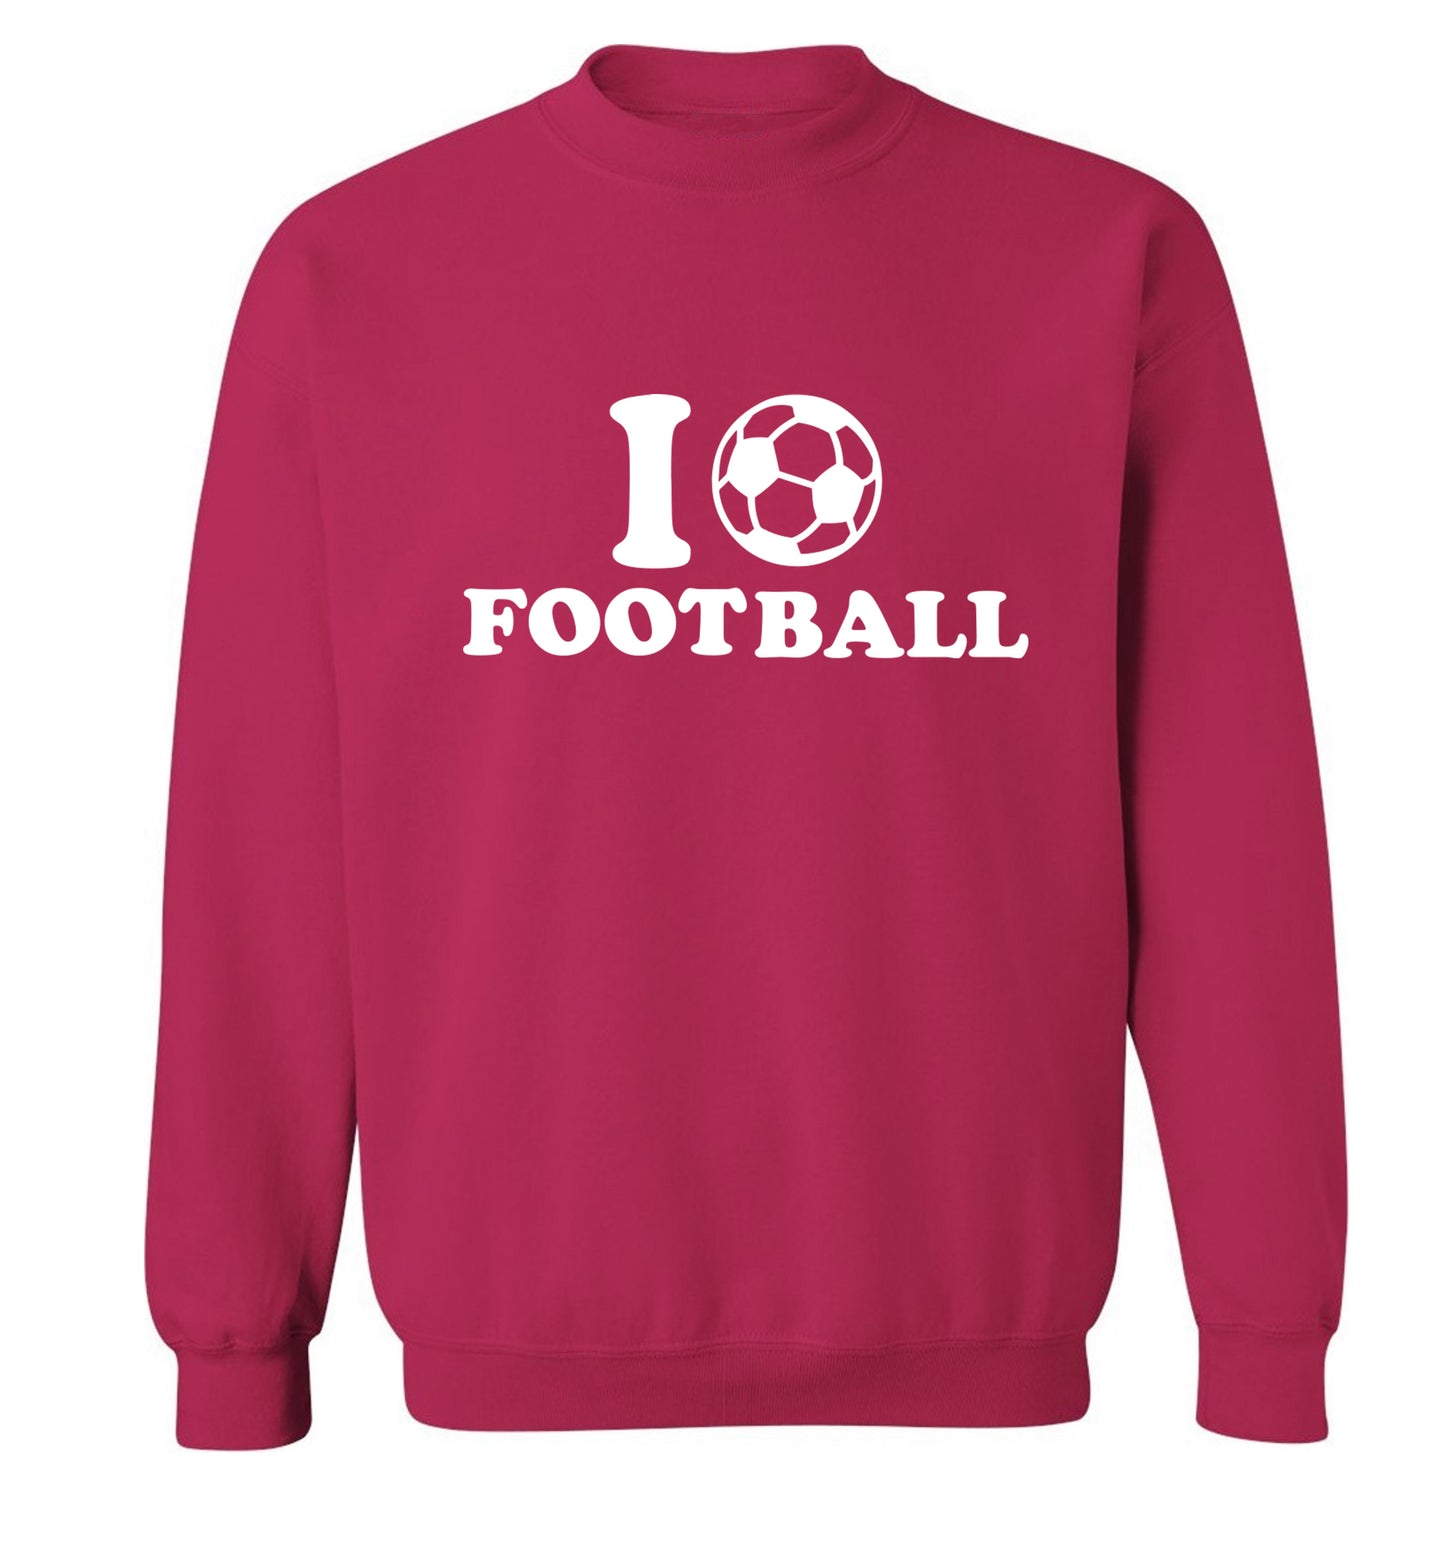 I love football Adult's unisexpink Sweater 2XL